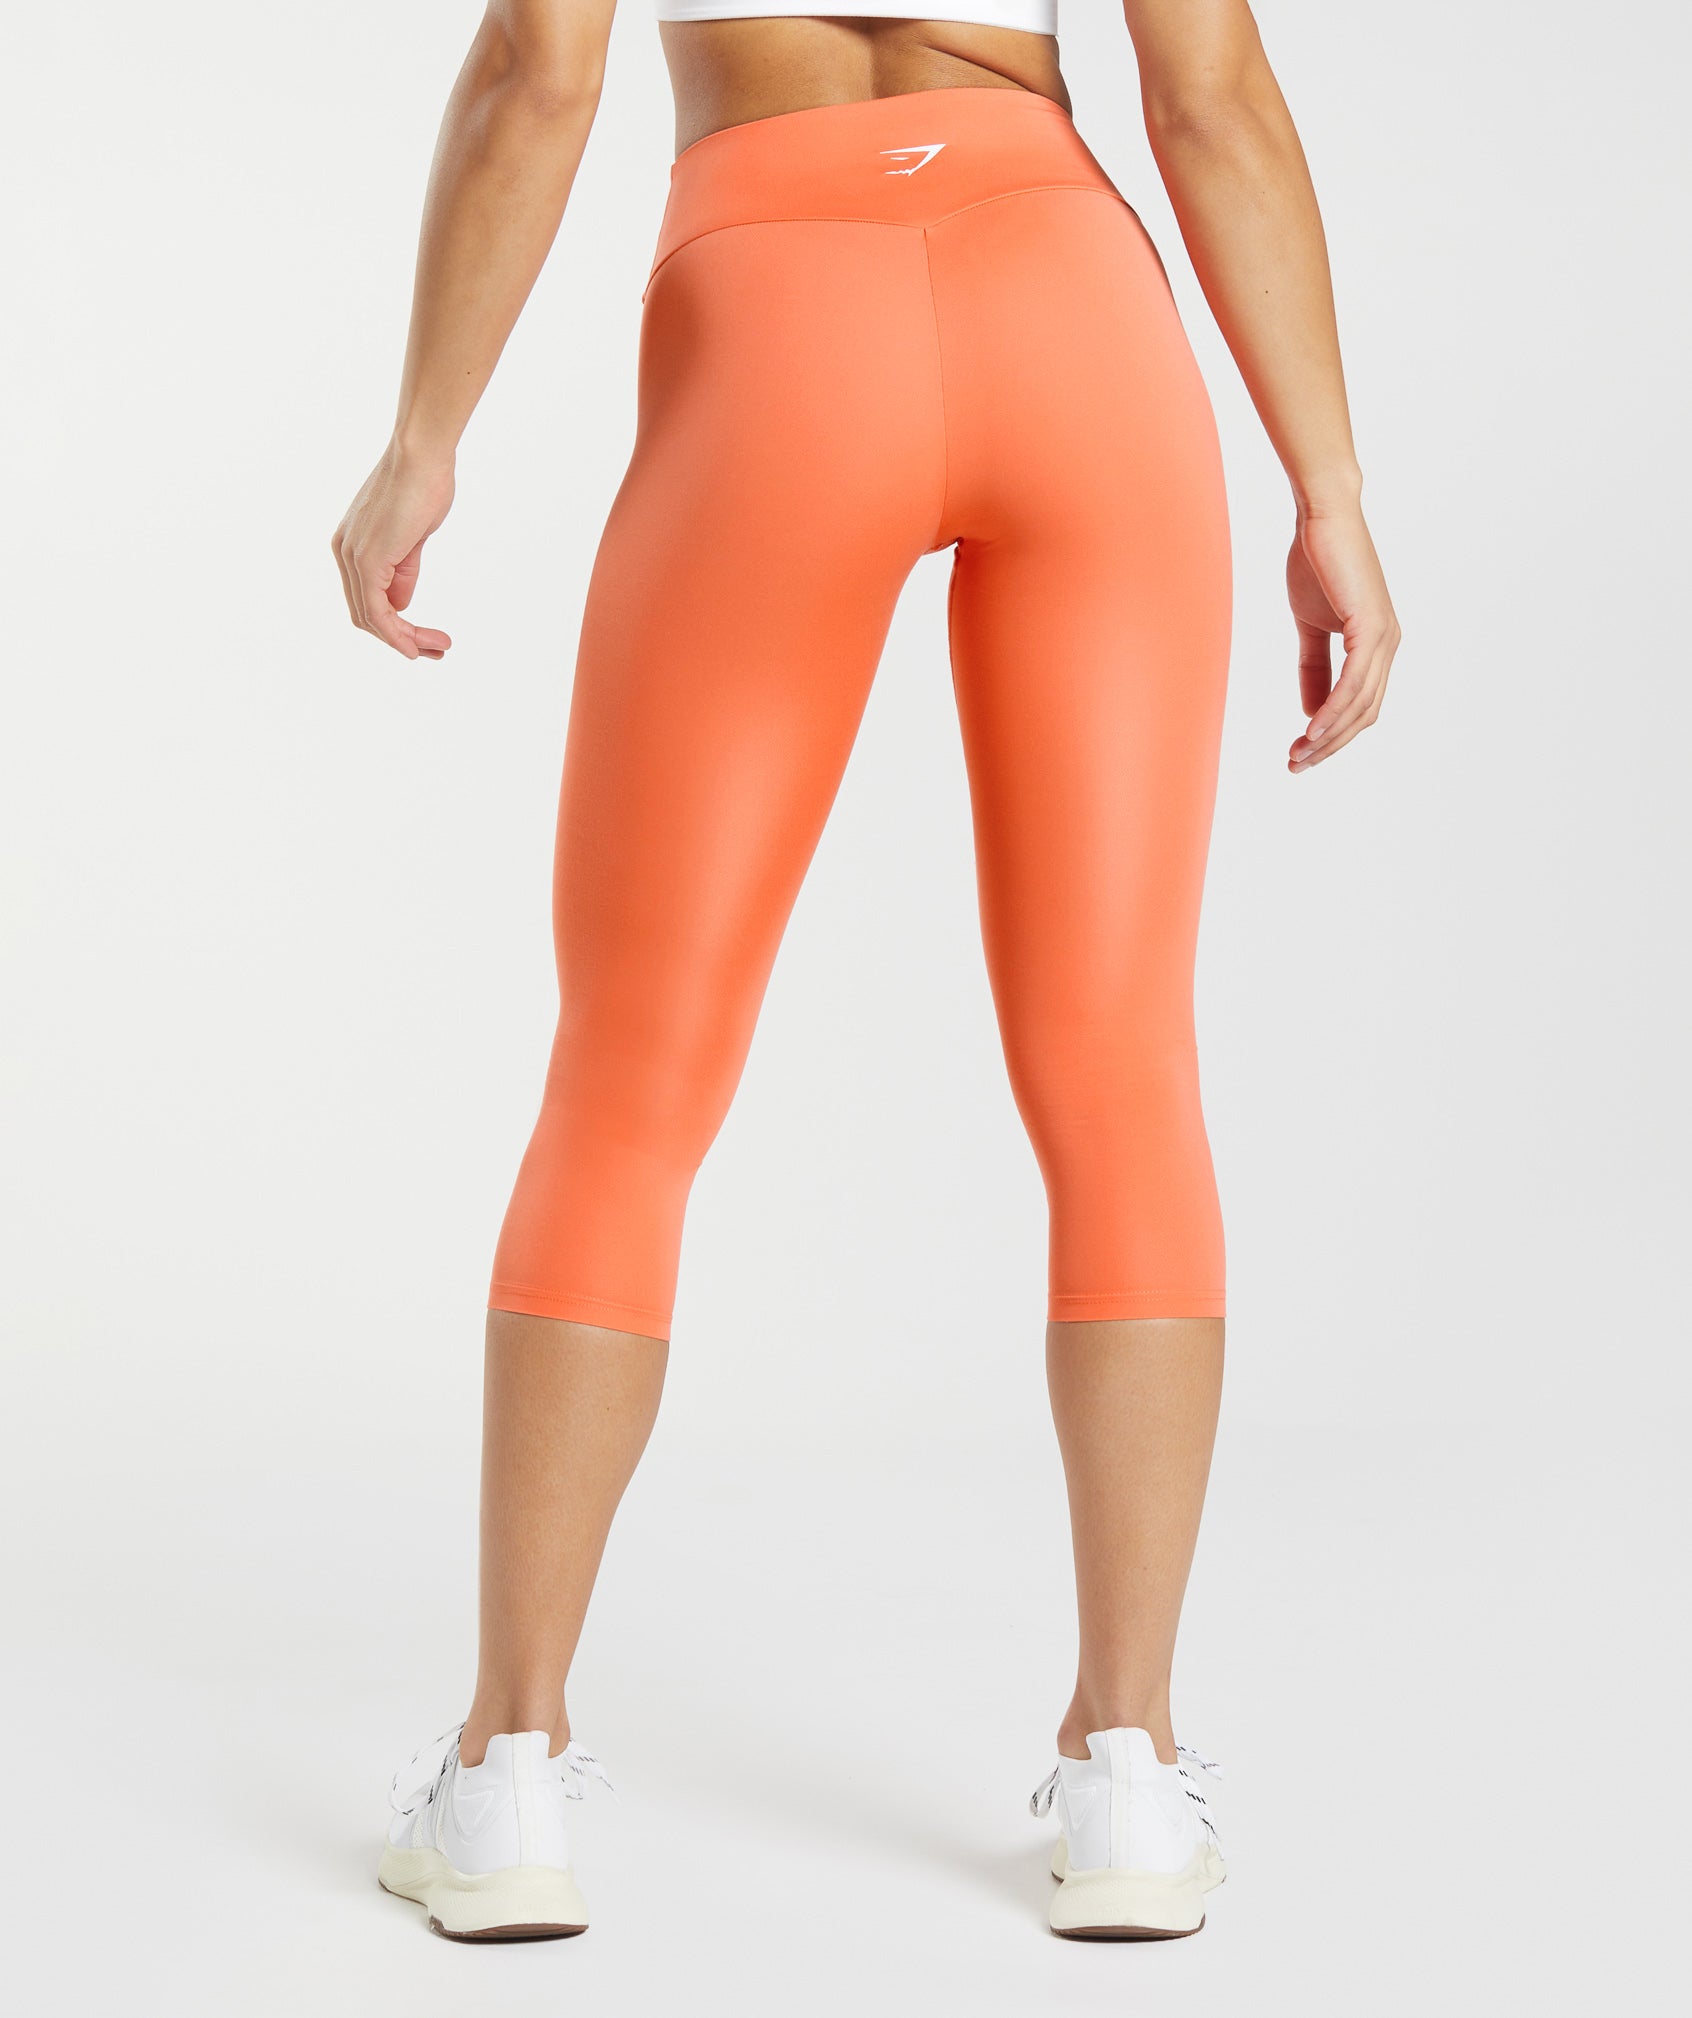 Women's Gym Clothes High Waisted Yoga Pants Orange Gymnasium